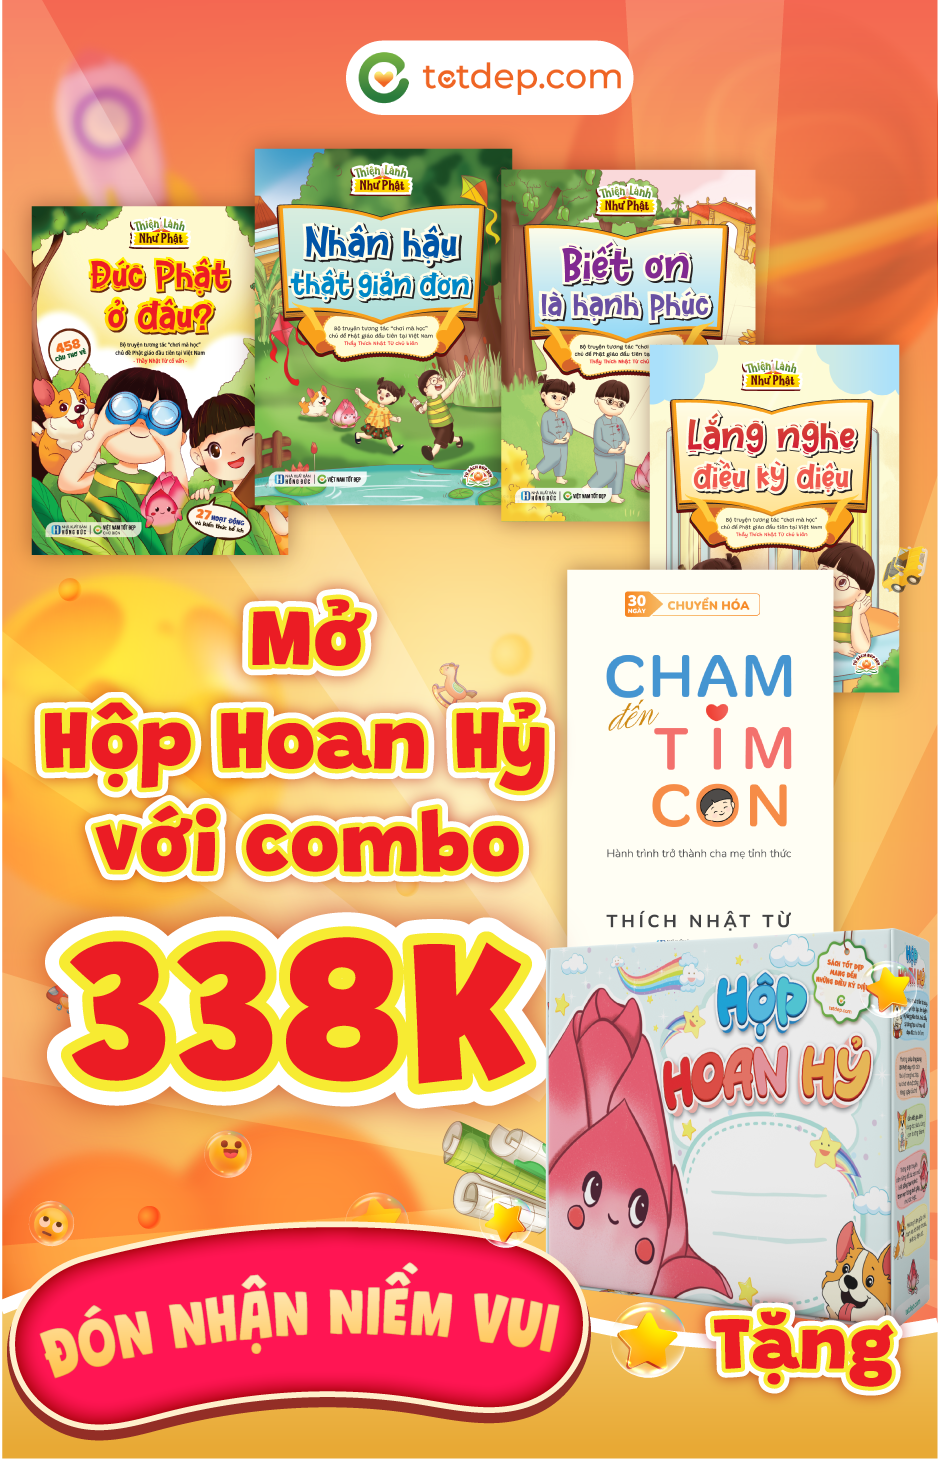 Hop hoan hy va cac combo san pham webt 450x700 combo2